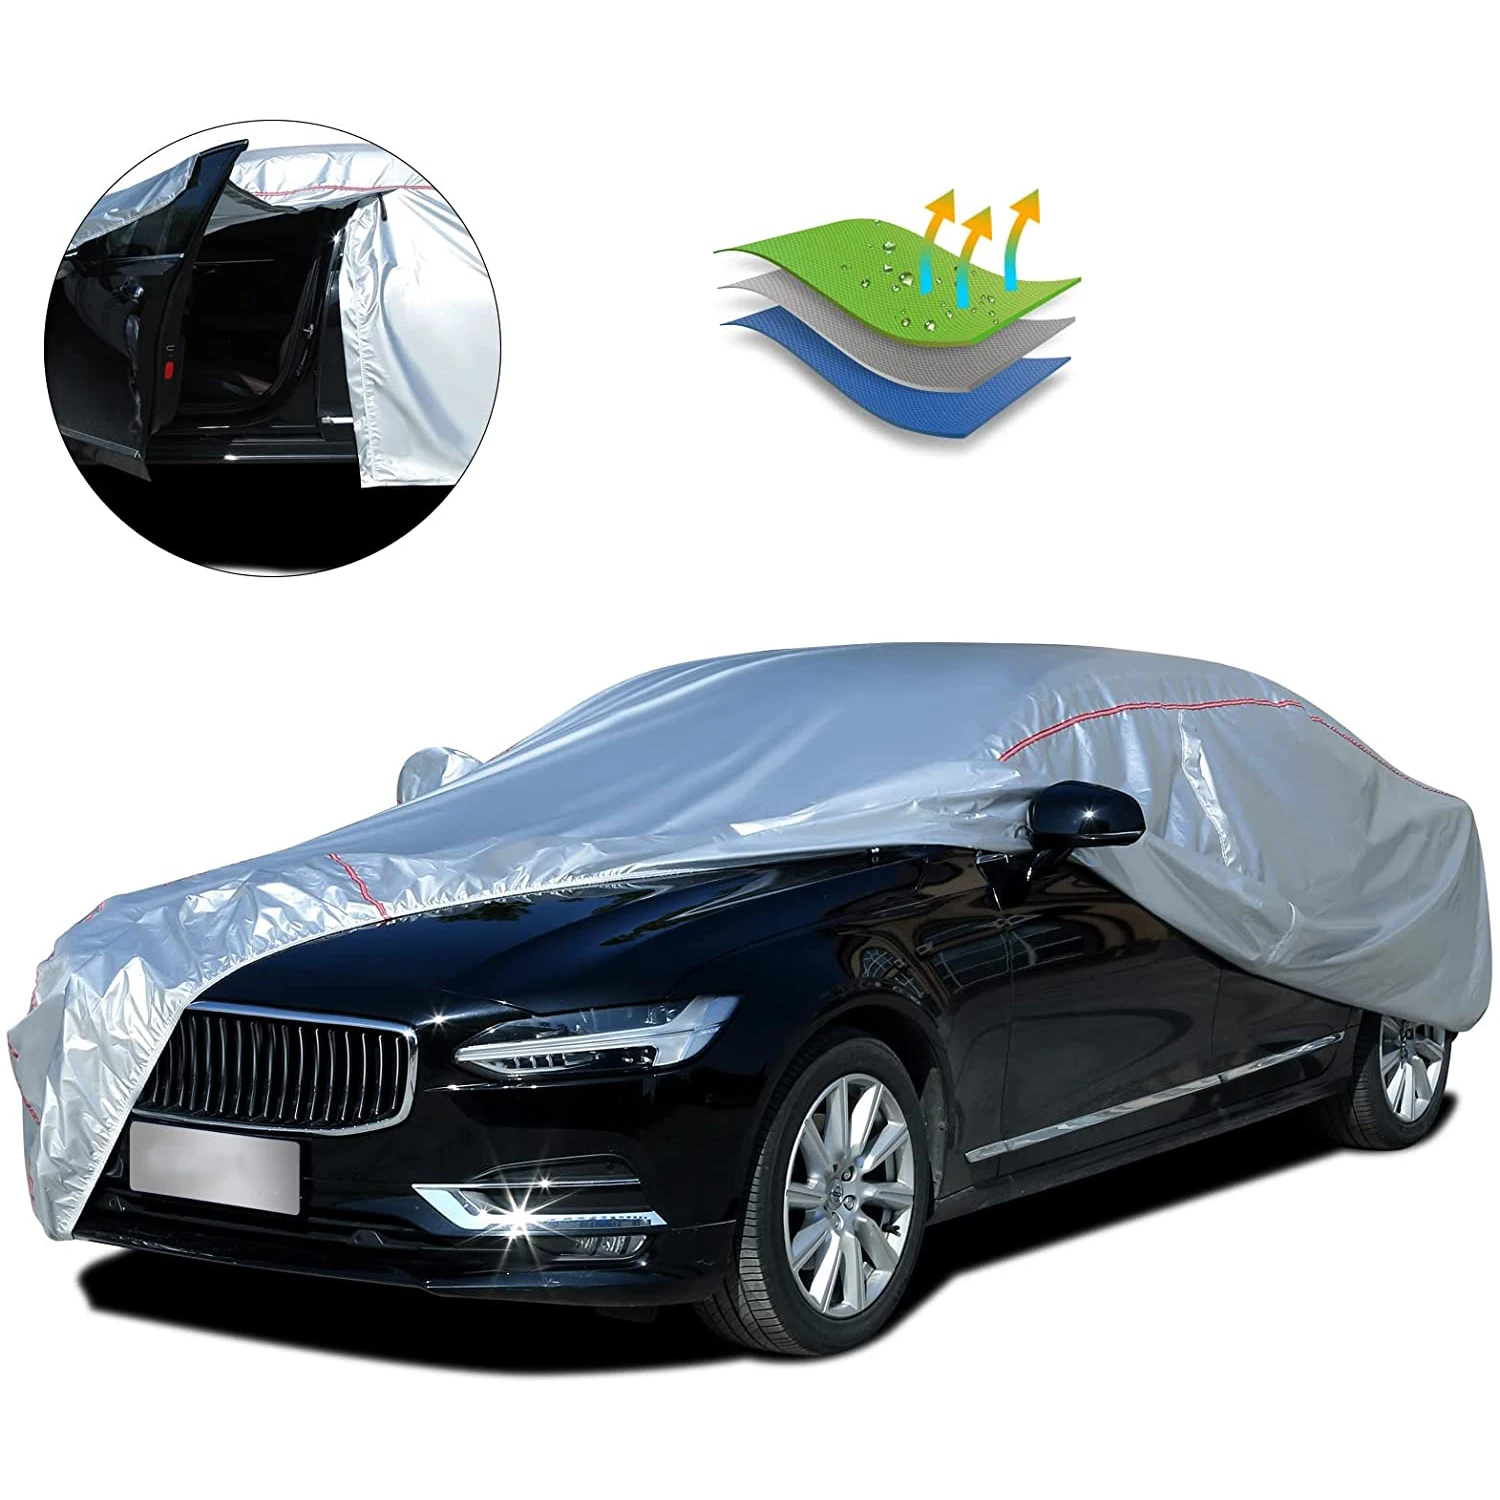 

190T Universal Car Covers Outdoor Sun Protection Dustproof Rainproof Snow Protection For Renault Clio Captur Kadjar Silver